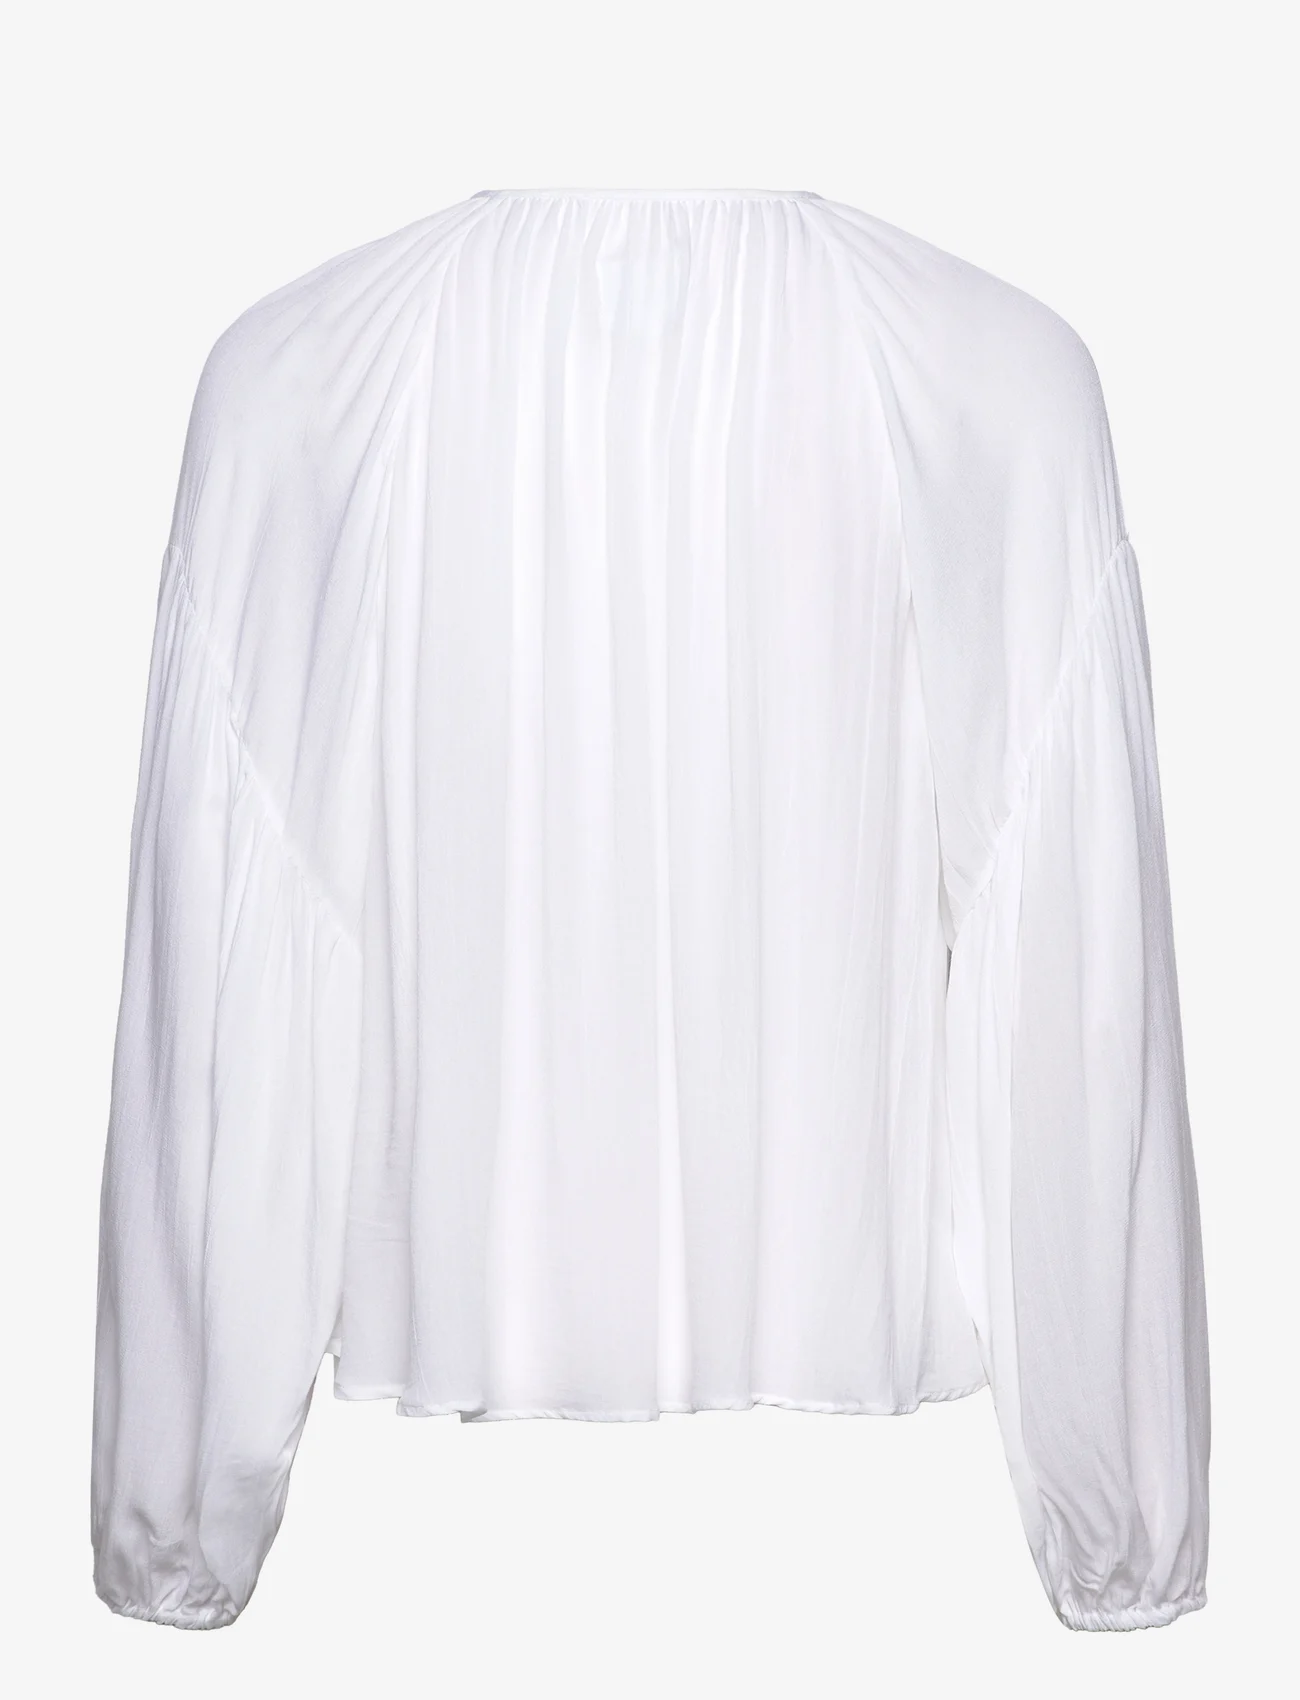 hálo - USVA CREPE BLOUSE - long-sleeved blouses - white - 1